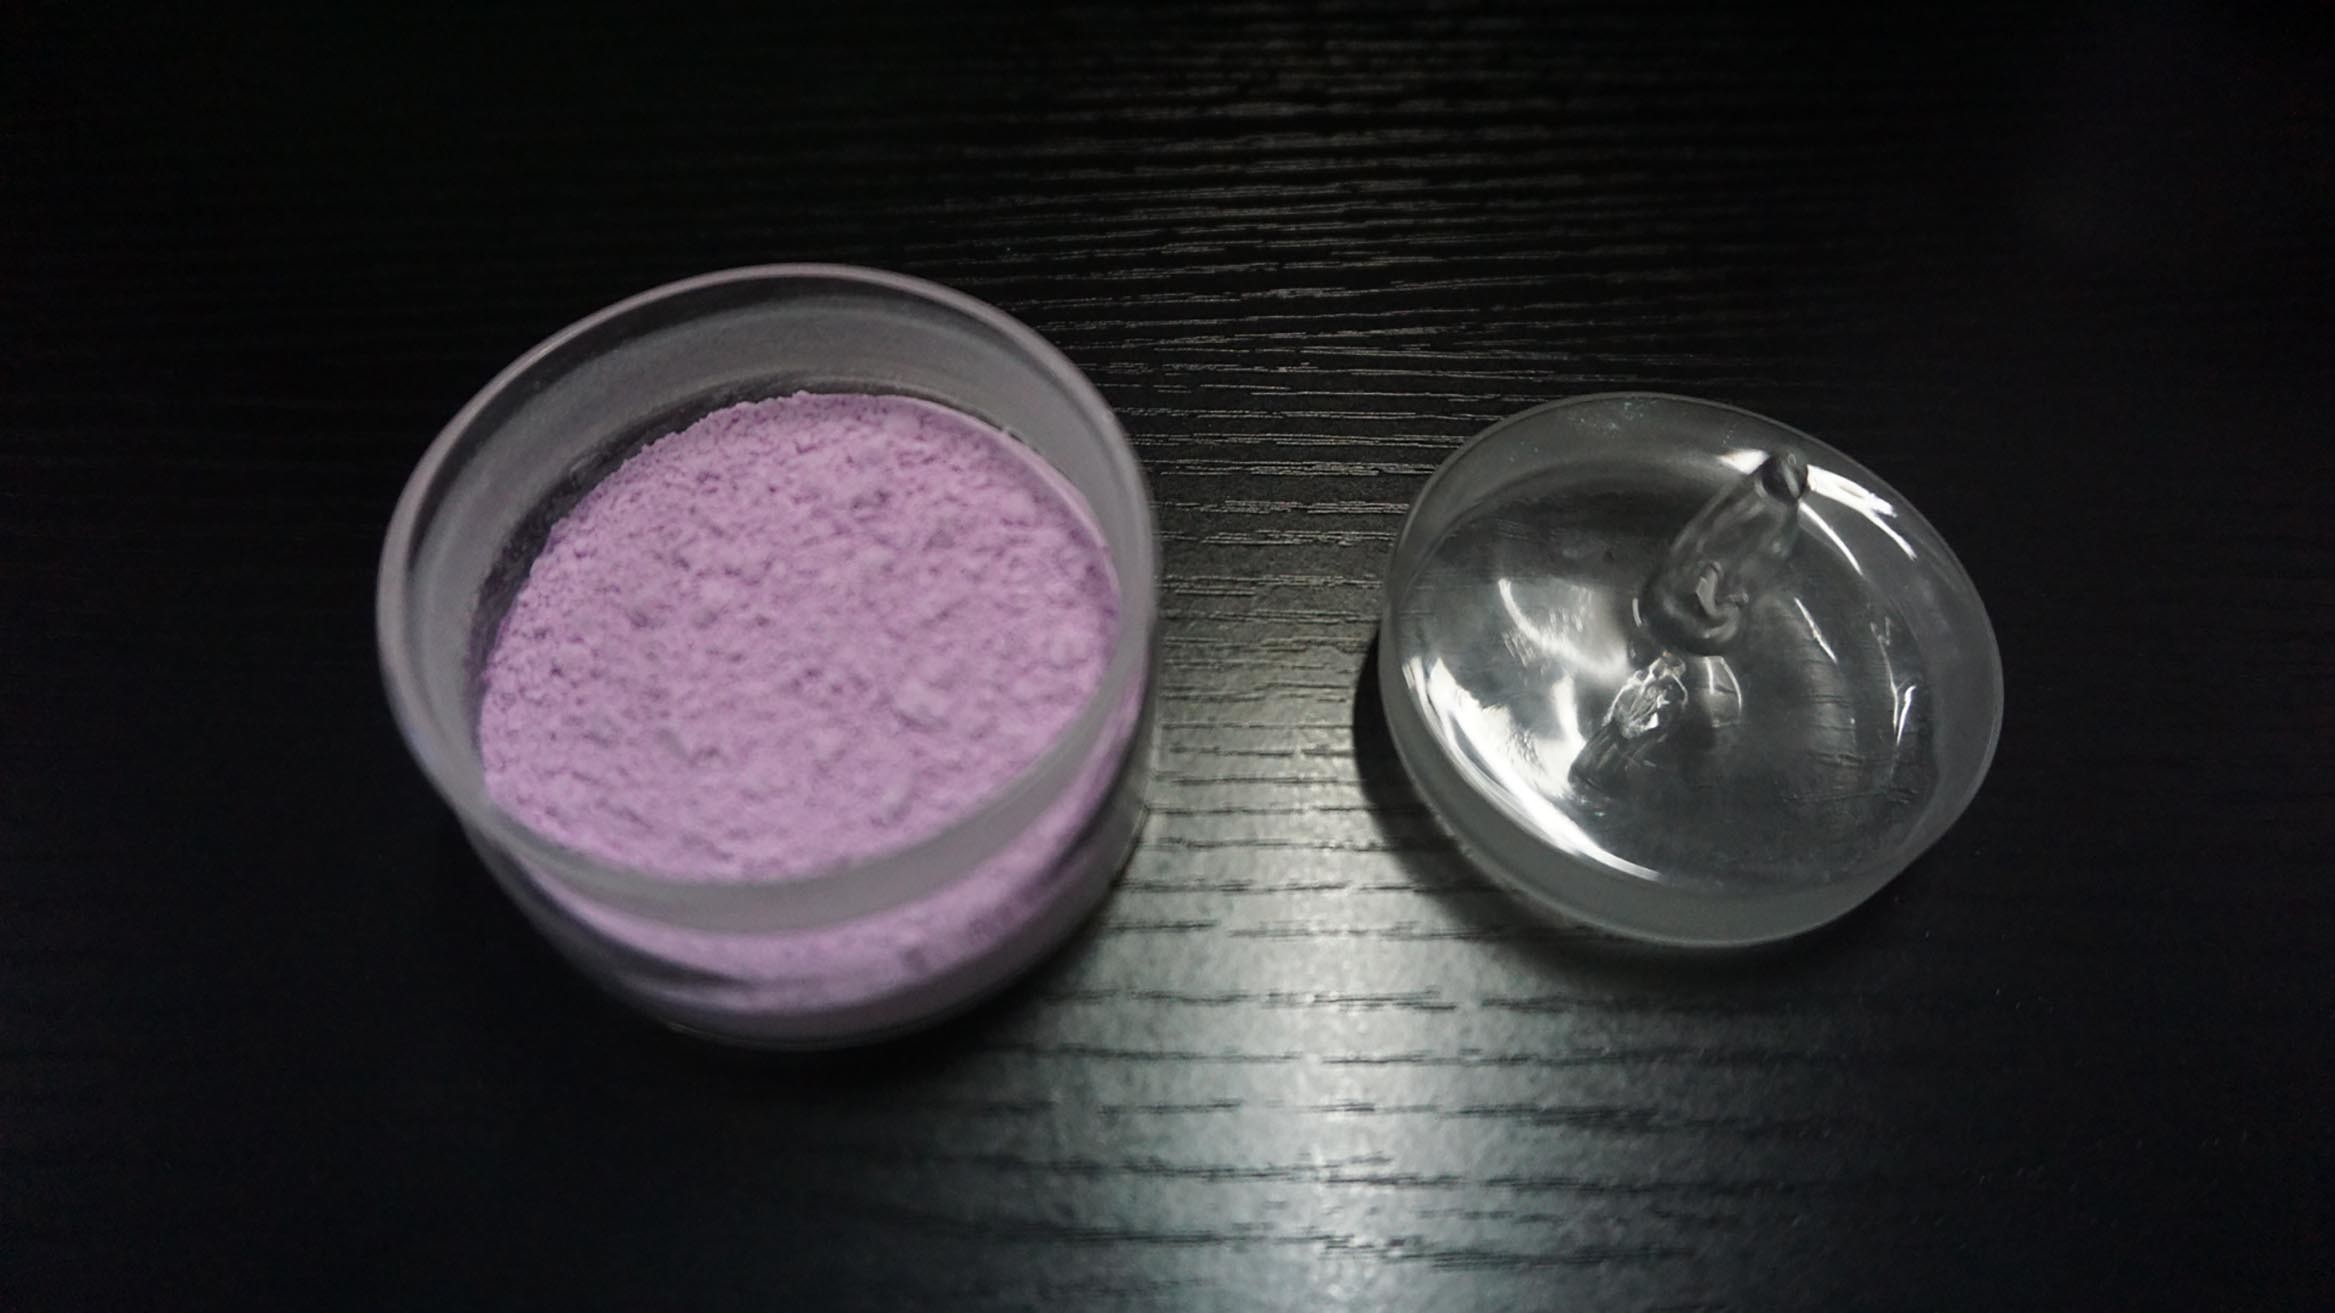 Dunkles purpurrotes Melamin, das Verbundplastikgeschirr-Rohstoff formt